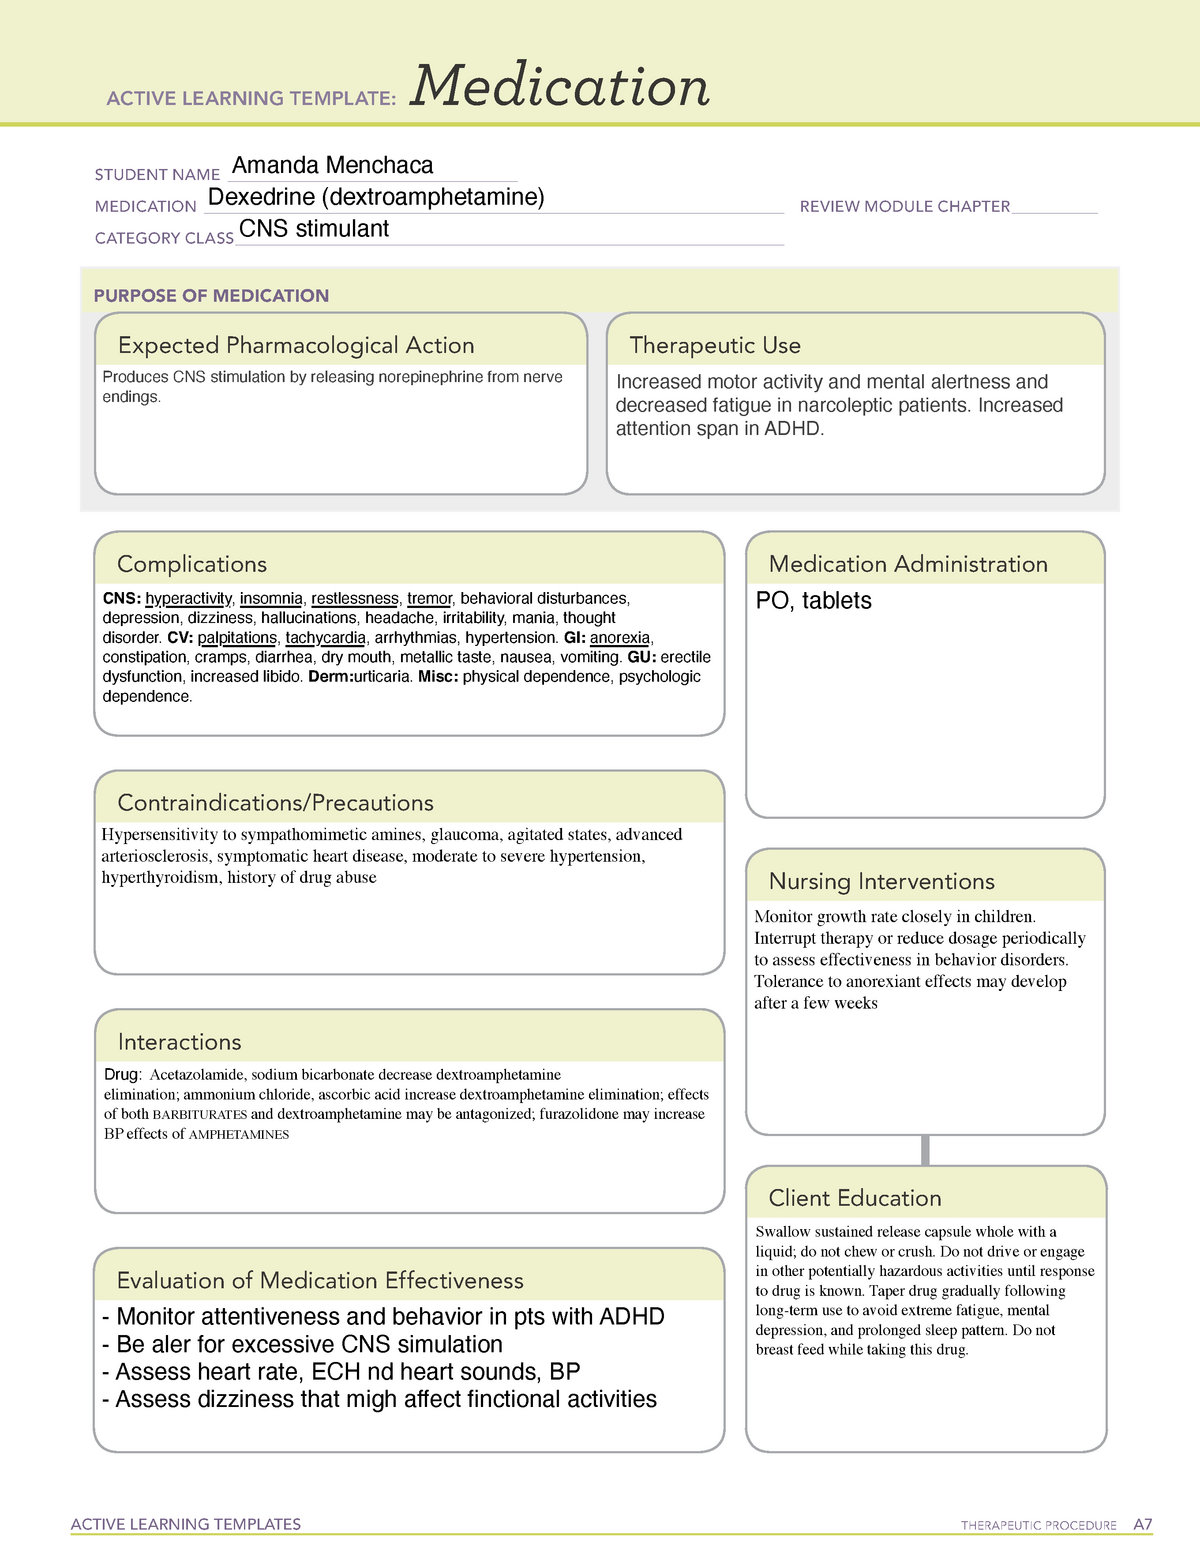 Dexedrine-MED - ATI medication card template - NUR22 With Regard To Medication Card Template